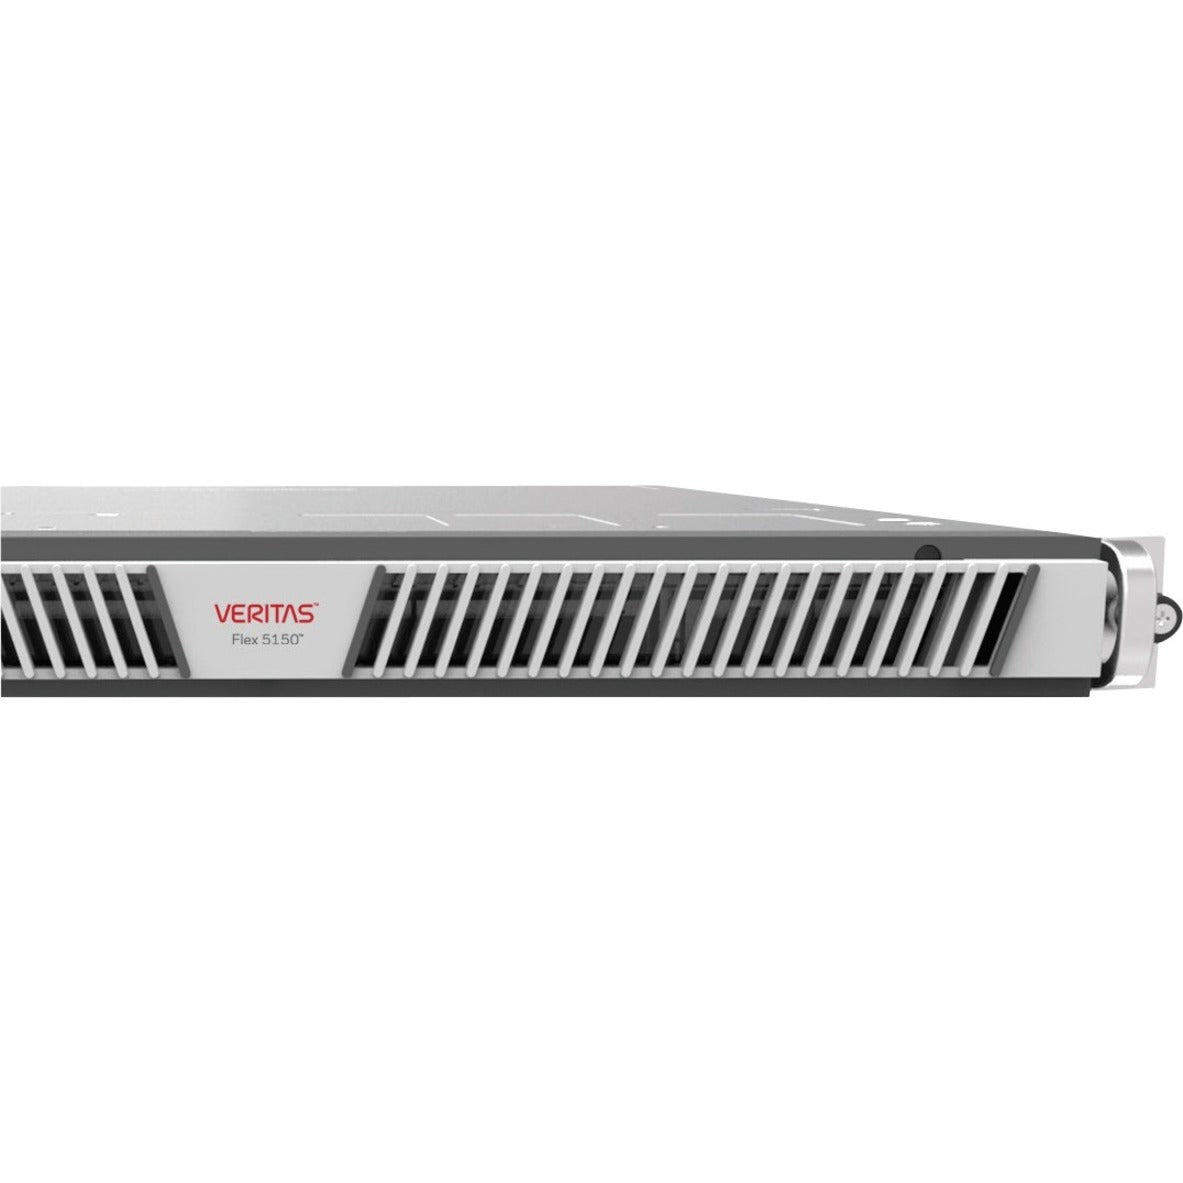 Veritas 26118-M0022 Flex System 5150 NAS Storage System, 15TB Total Hard Drive Capacity Installed, 12Gb/s SAS Controller, 8 Network (RJ-45) Ports